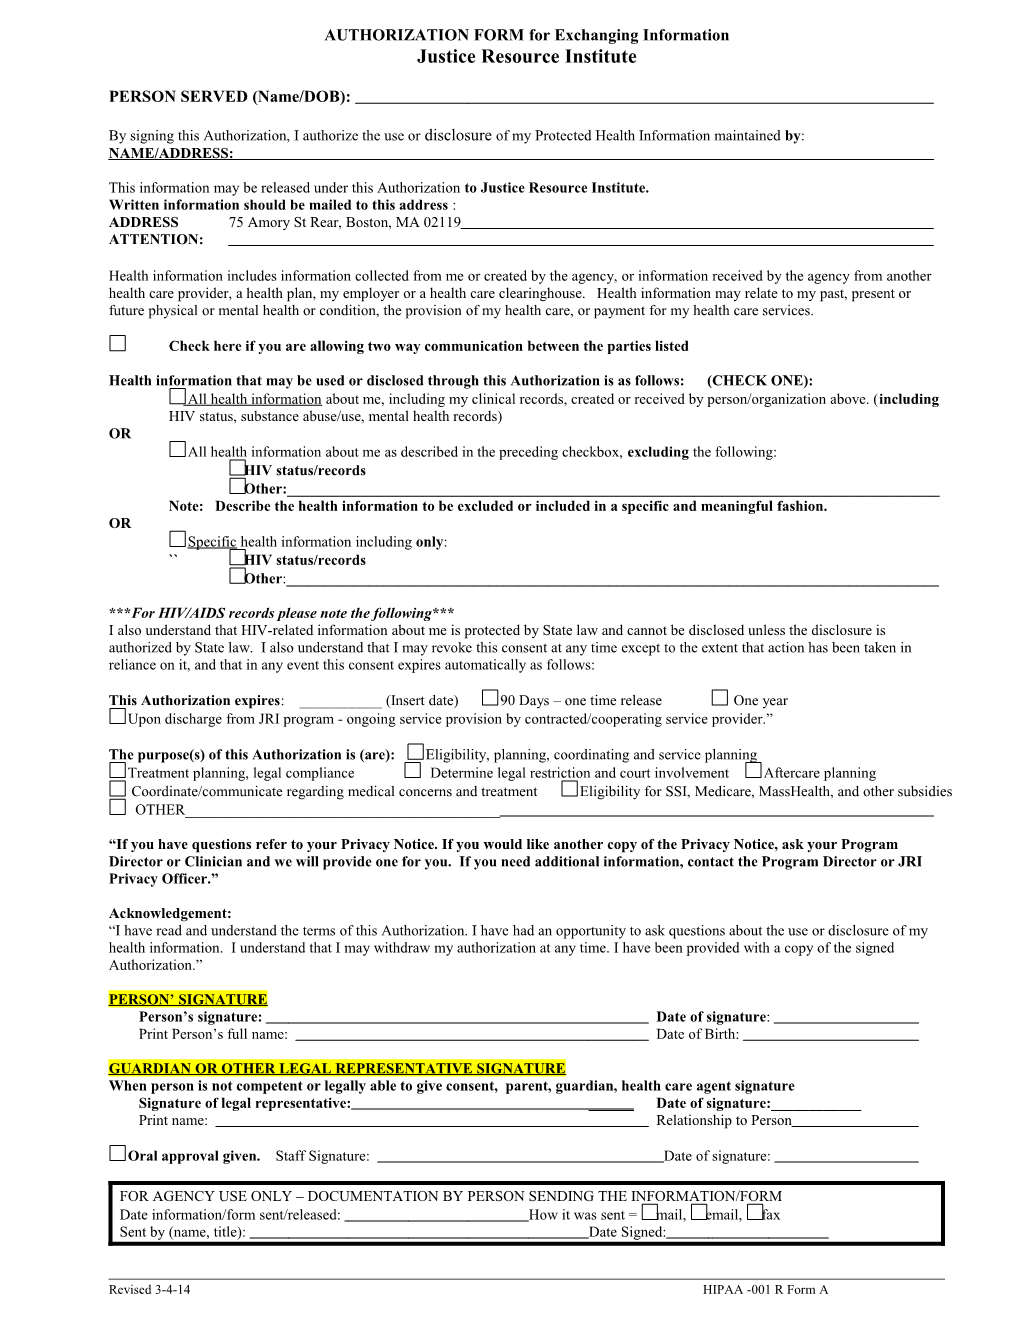 HIPAA-001 R FORM a -Authorization Form